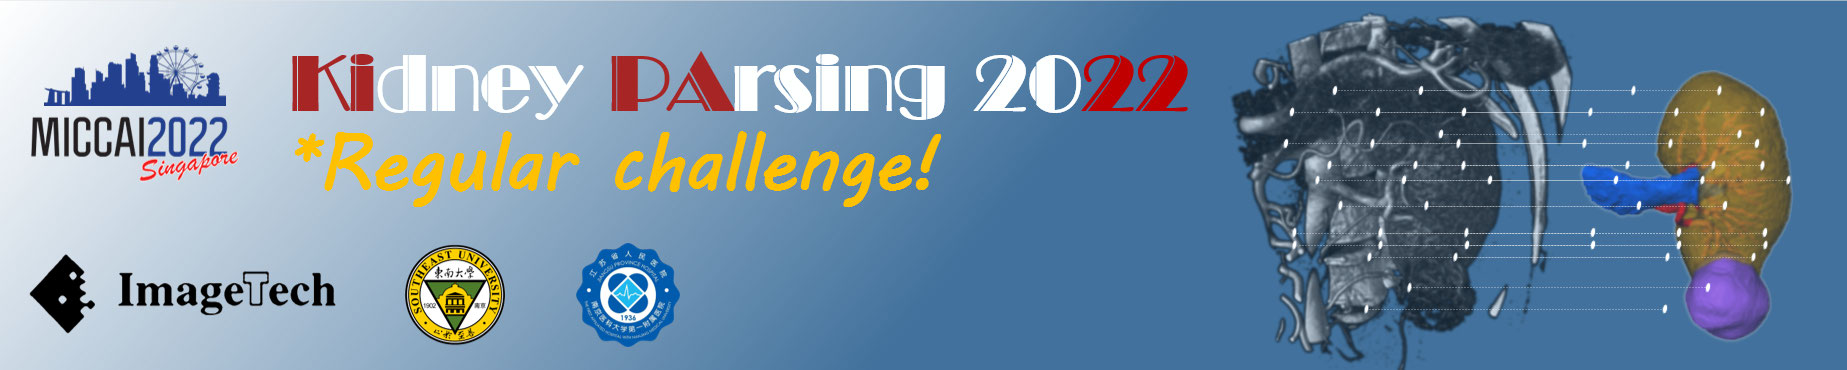 KiPA22 (Regular Challenge) Banner